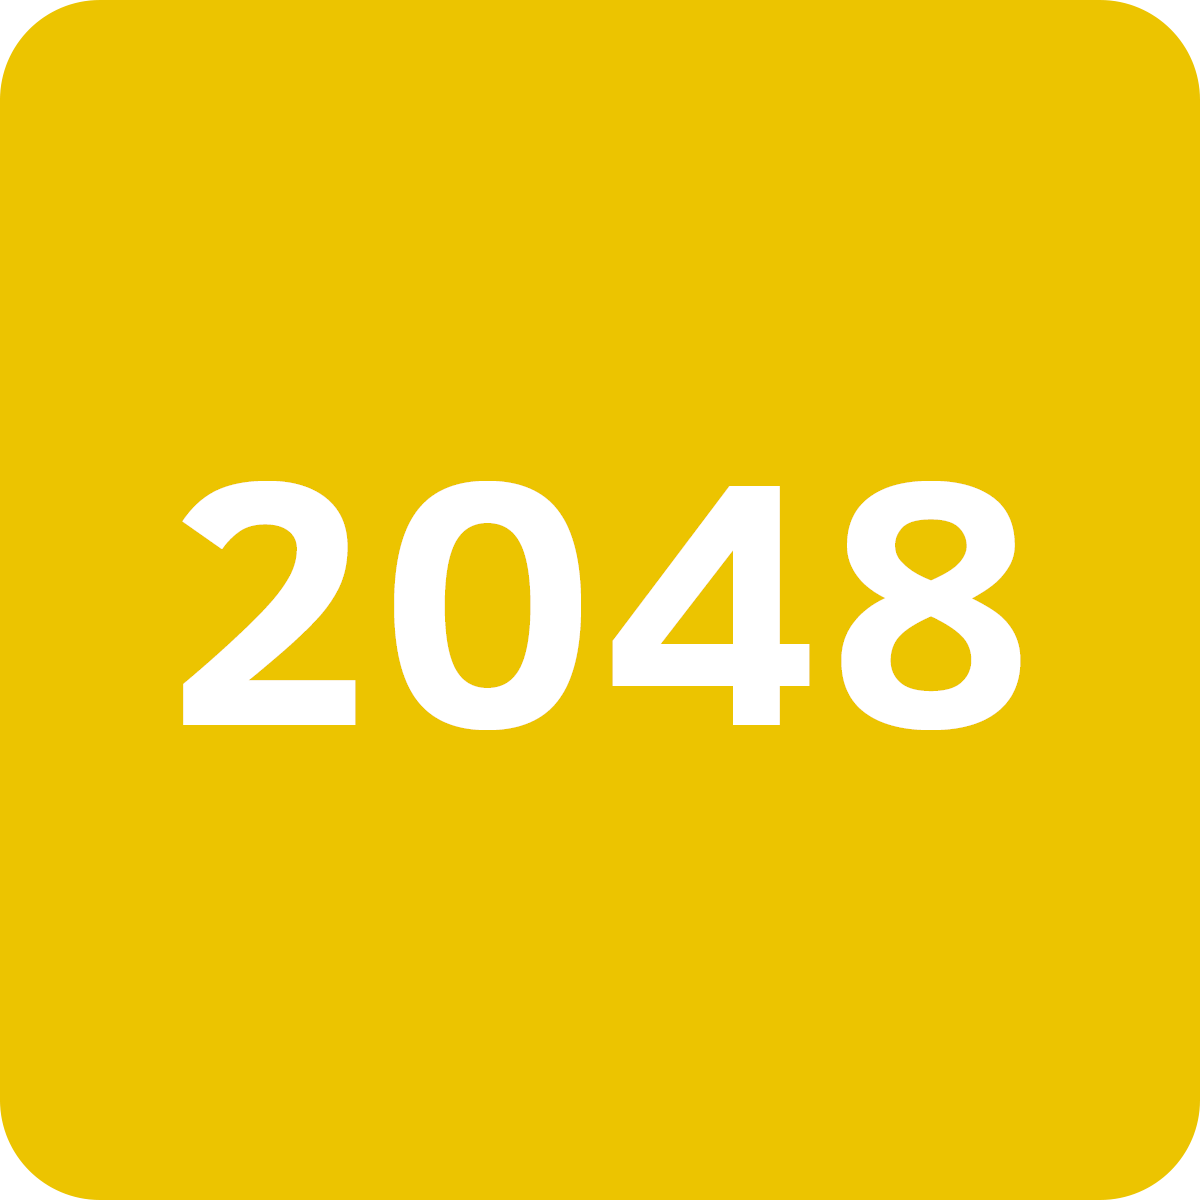 google 2048 game online